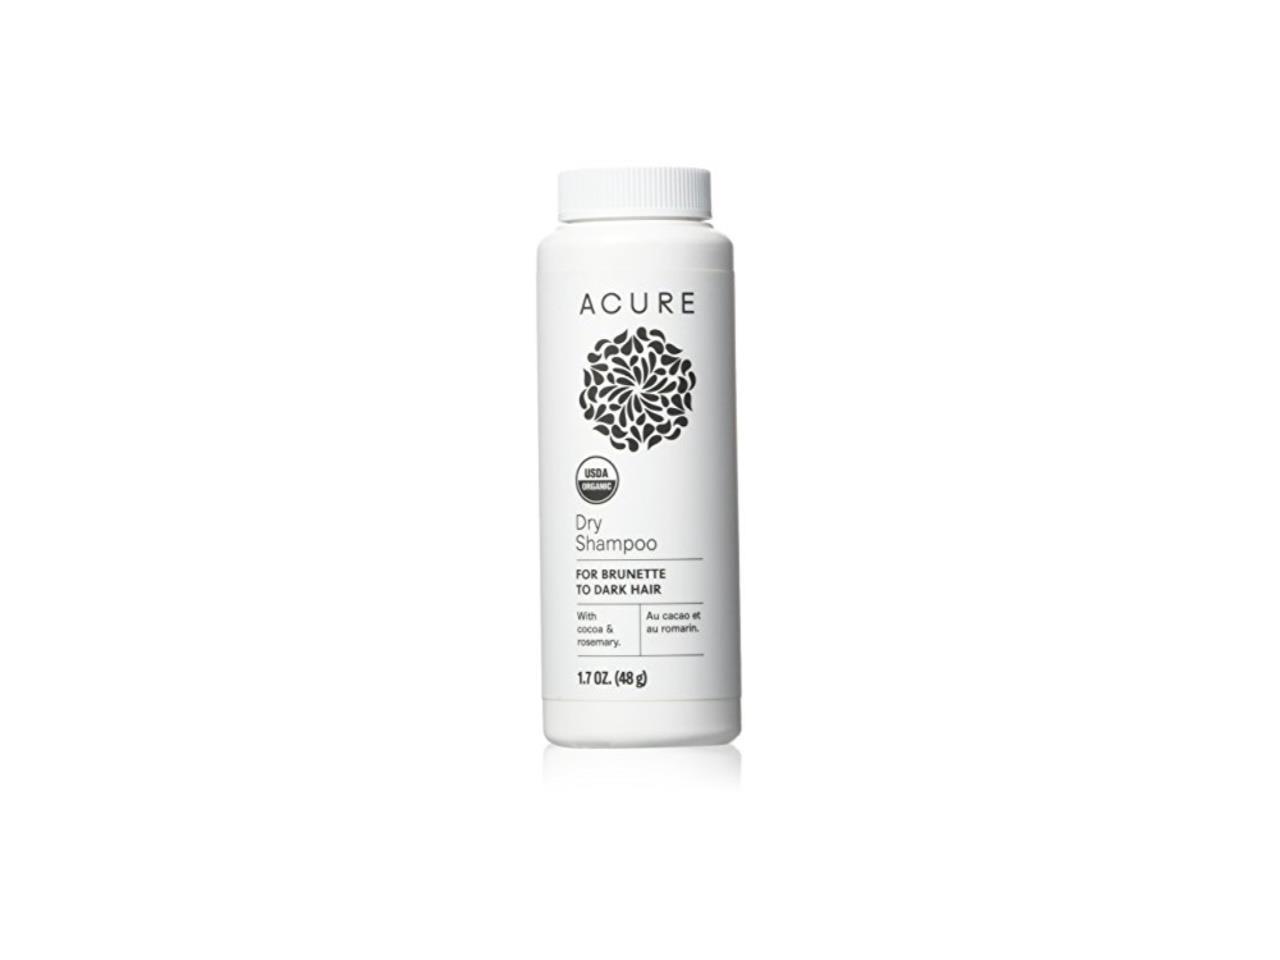 Acure, Dry Shampoo, for Brunette to Dark Hair, 1.7 oz 48g